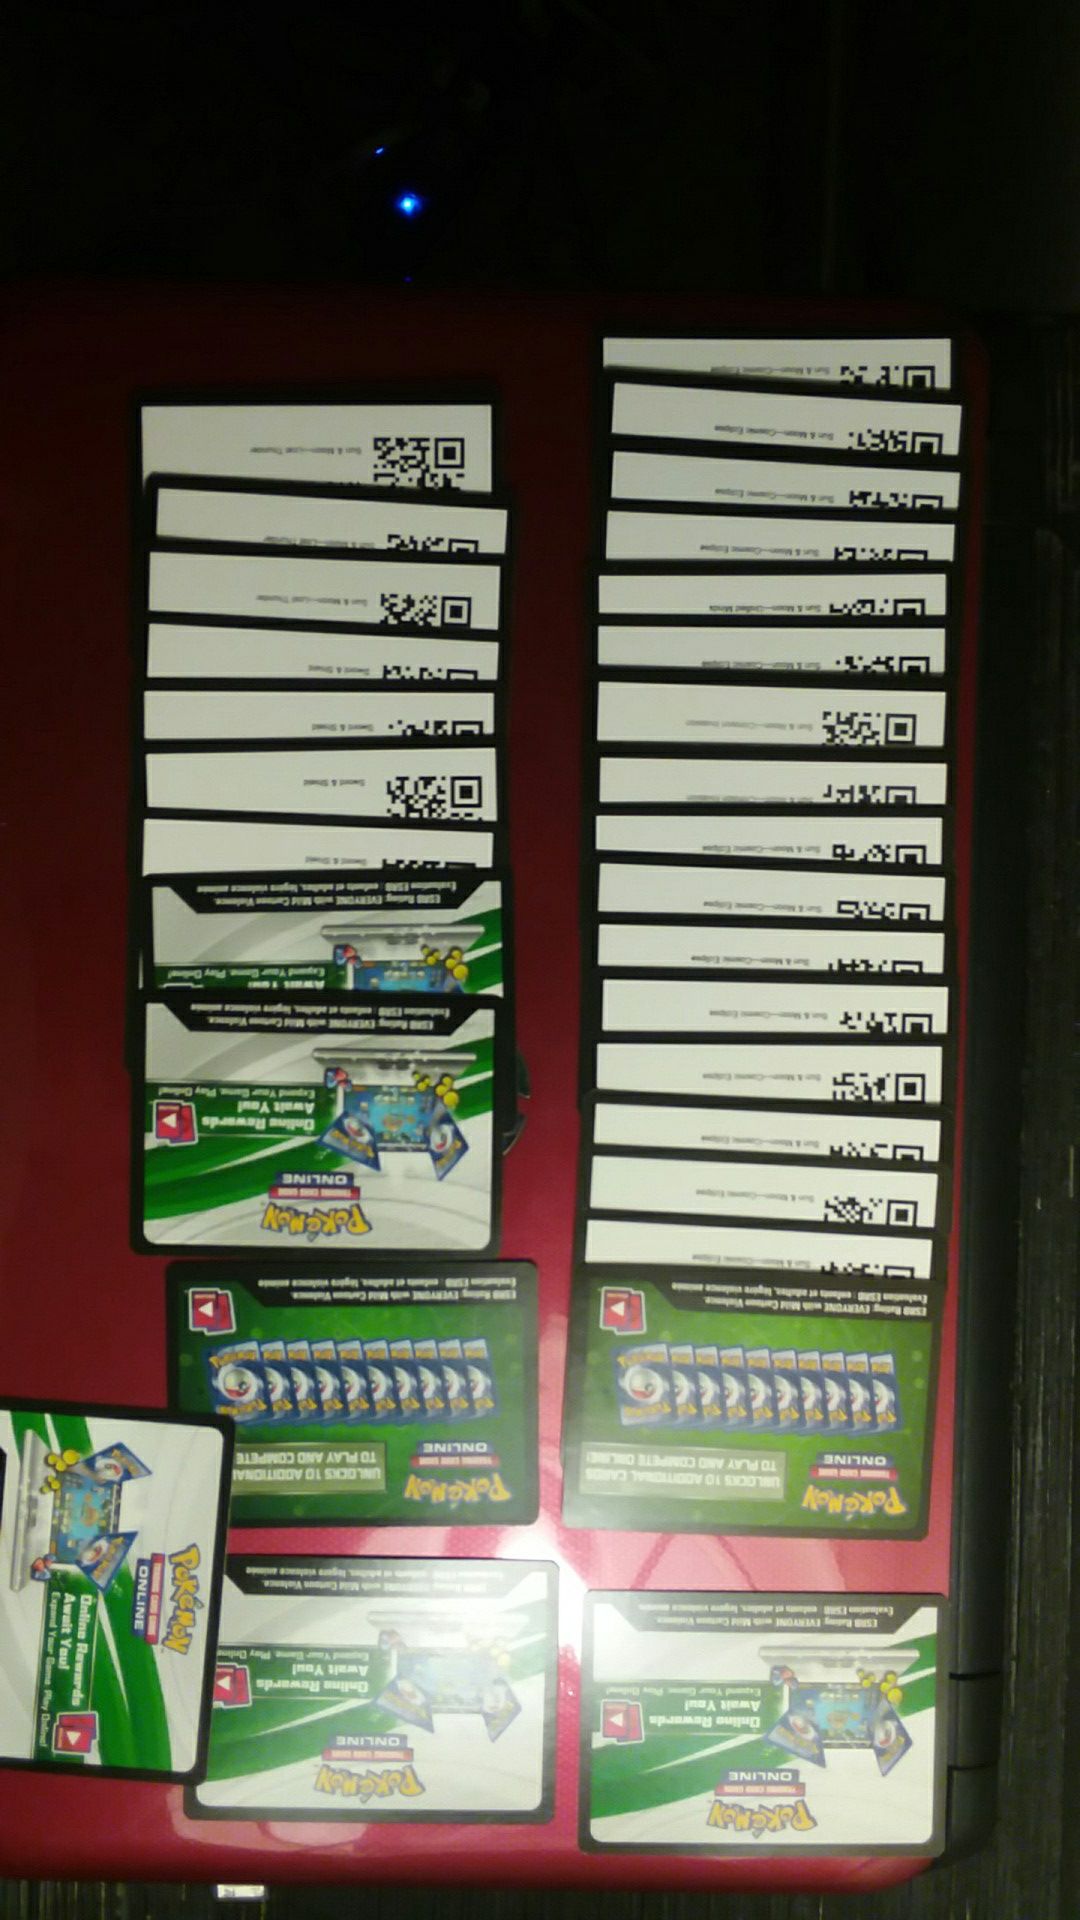 Pokemon Code Cards mixed